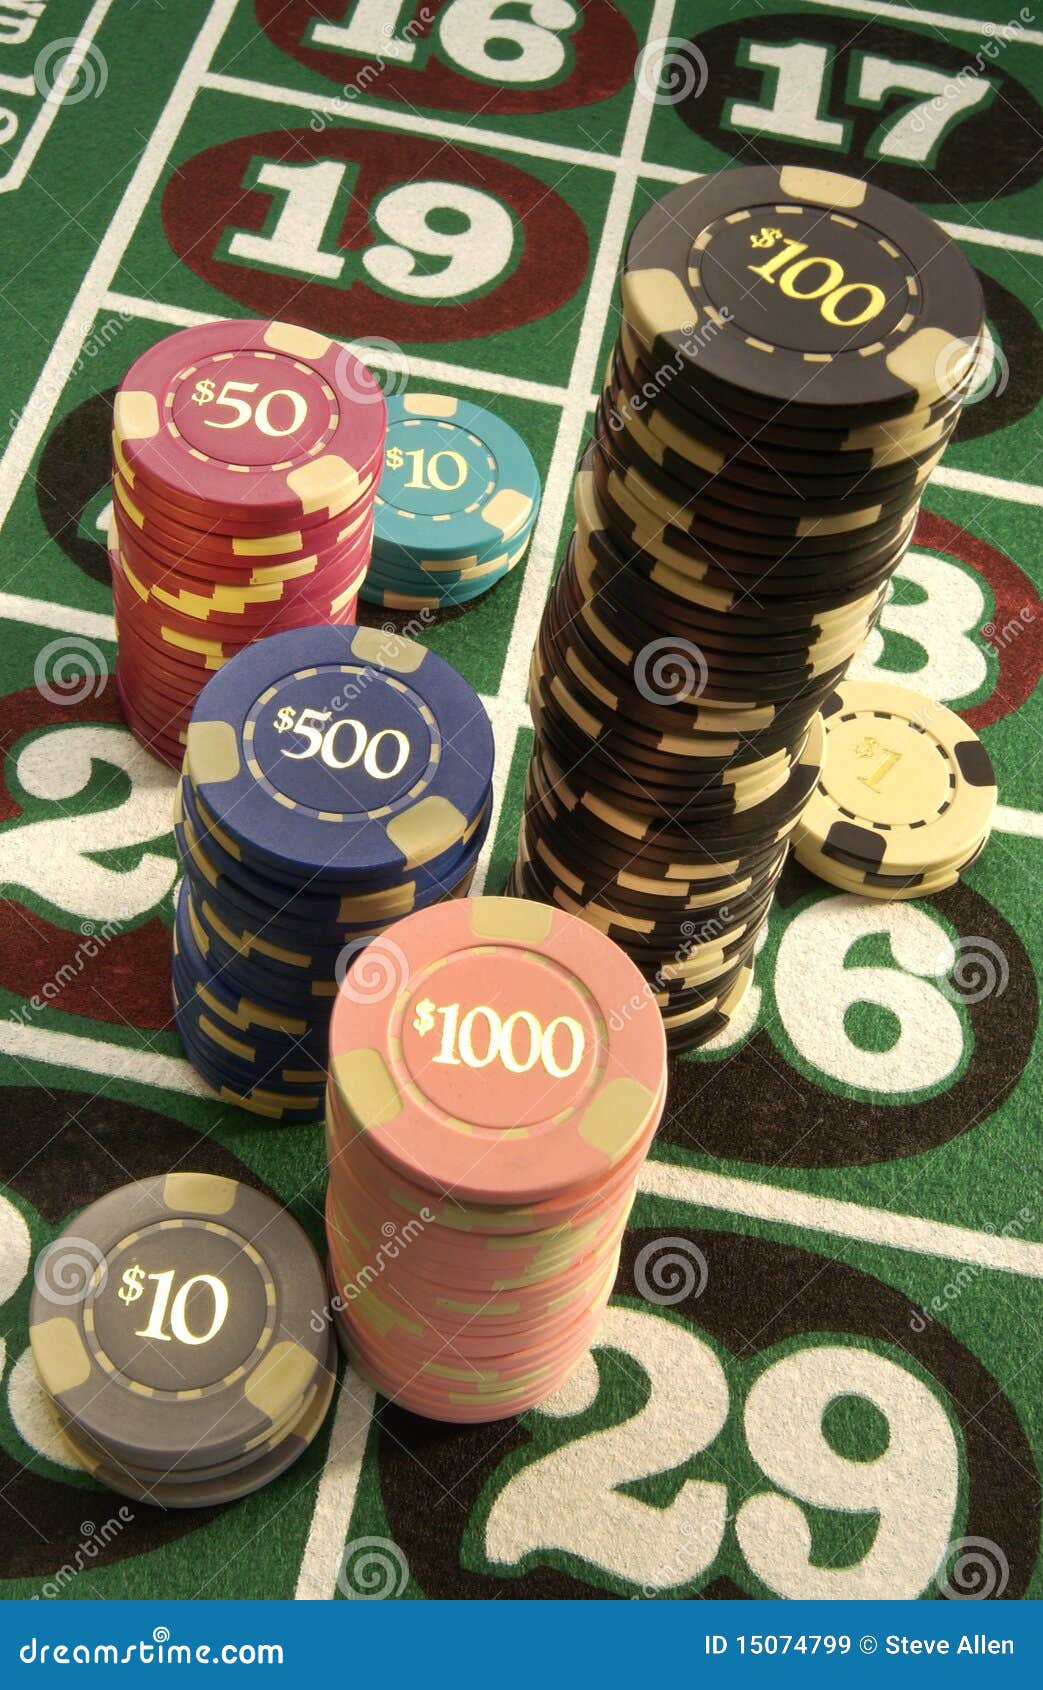 On line casino gambling